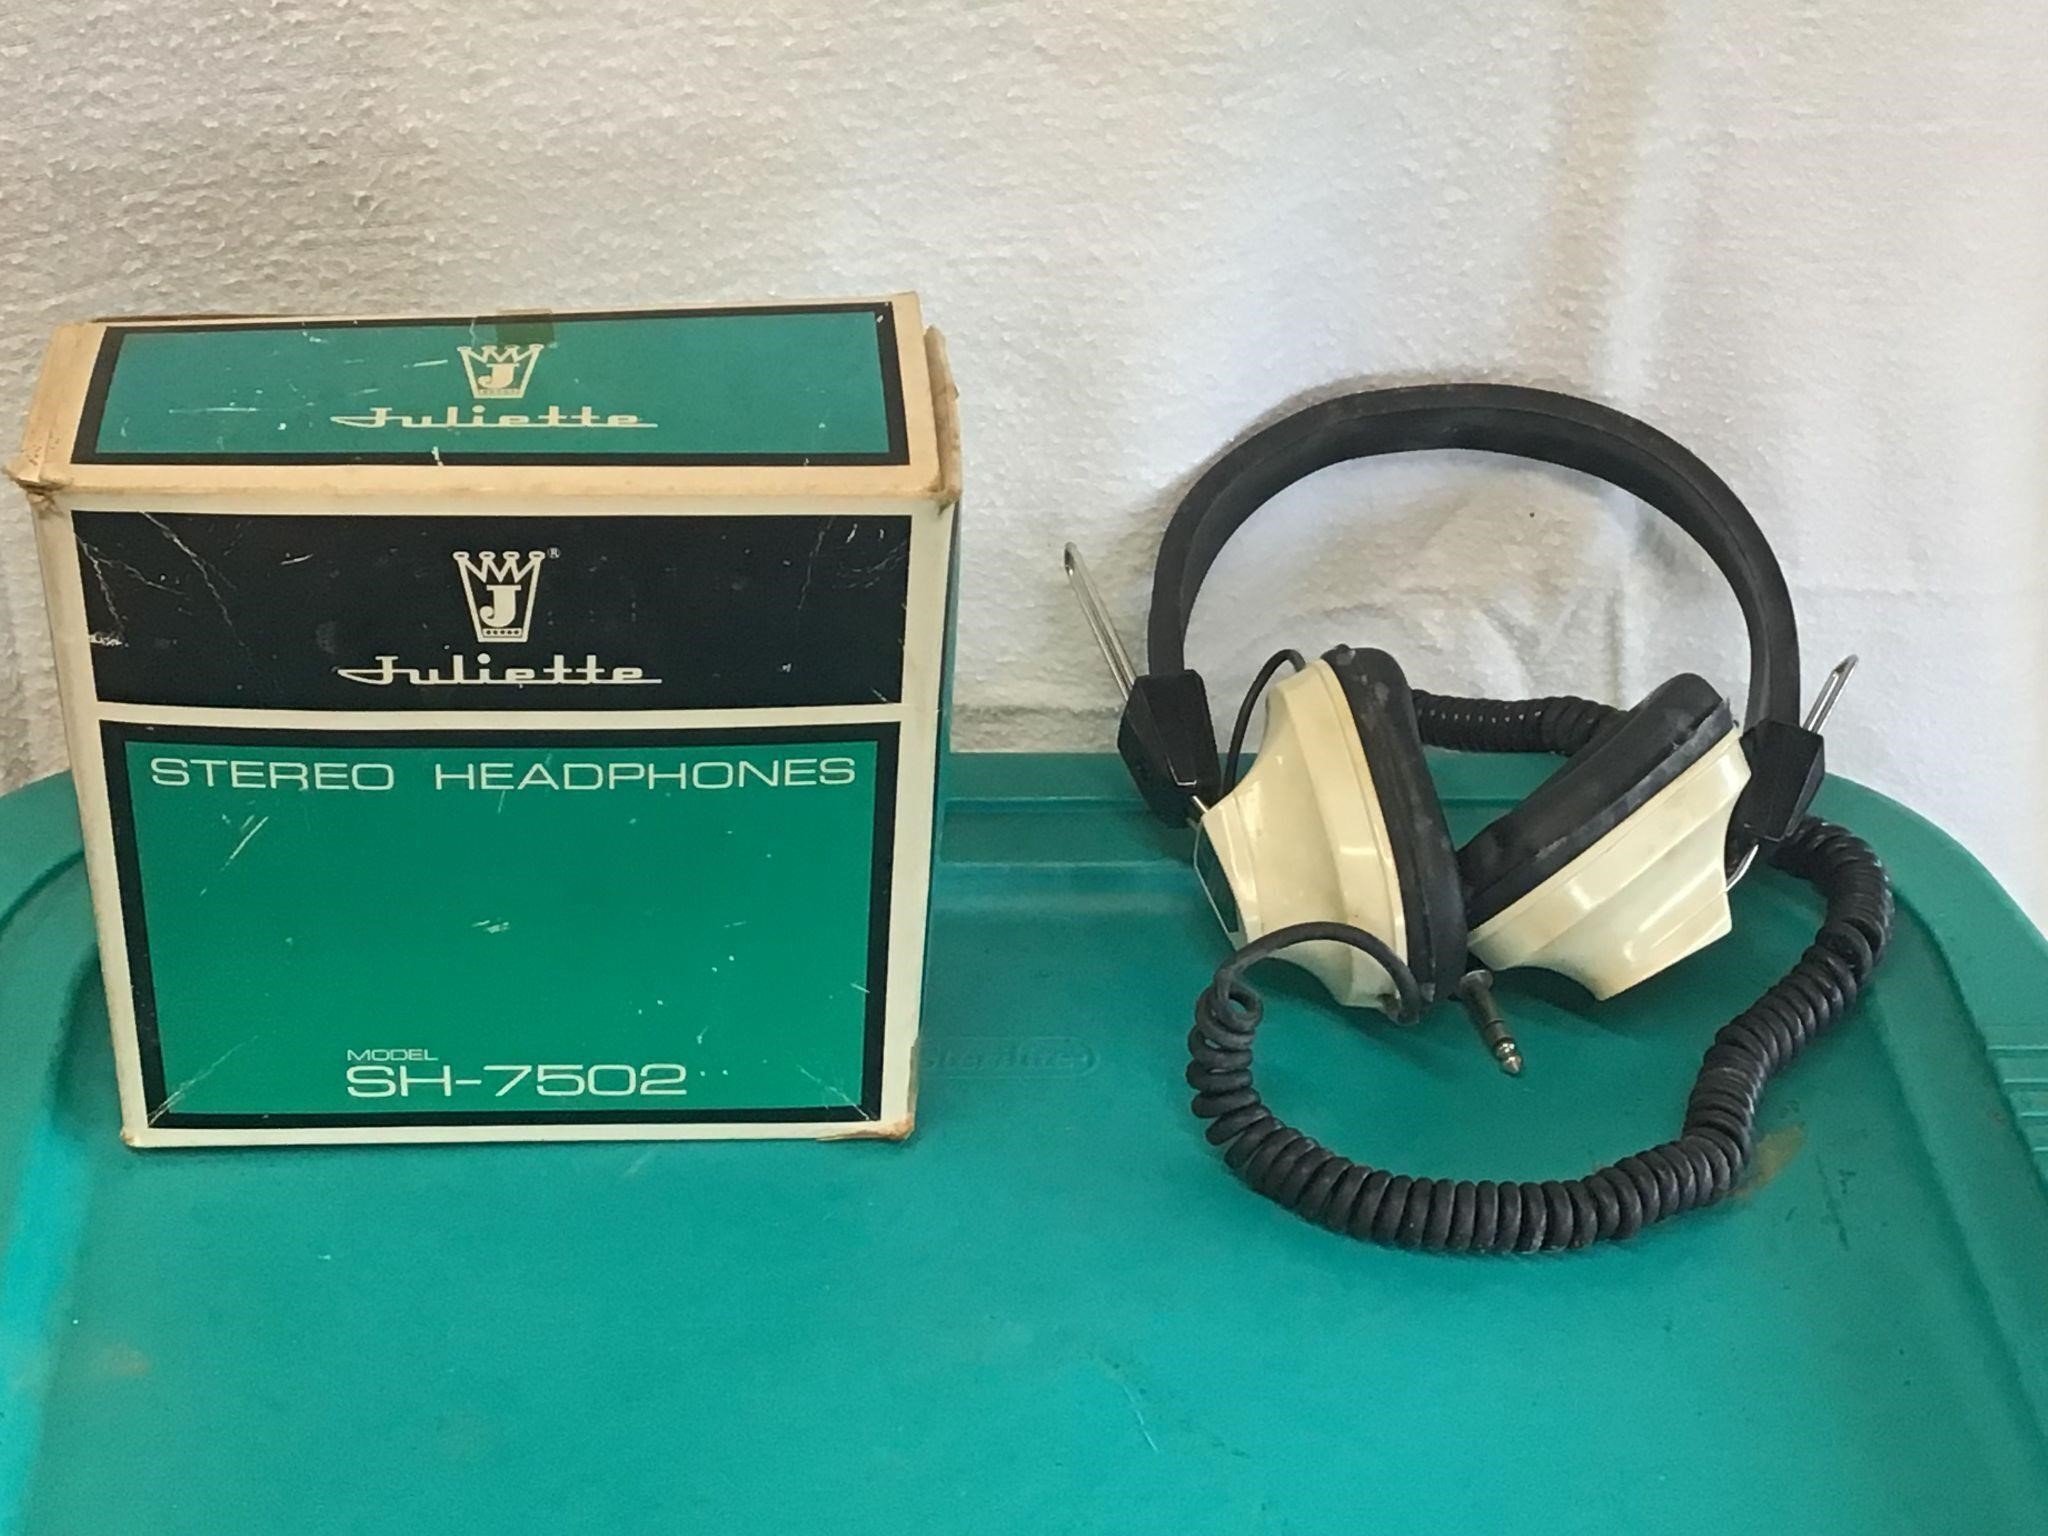 JULIETTE STEREO HEADPHONES IN BOX